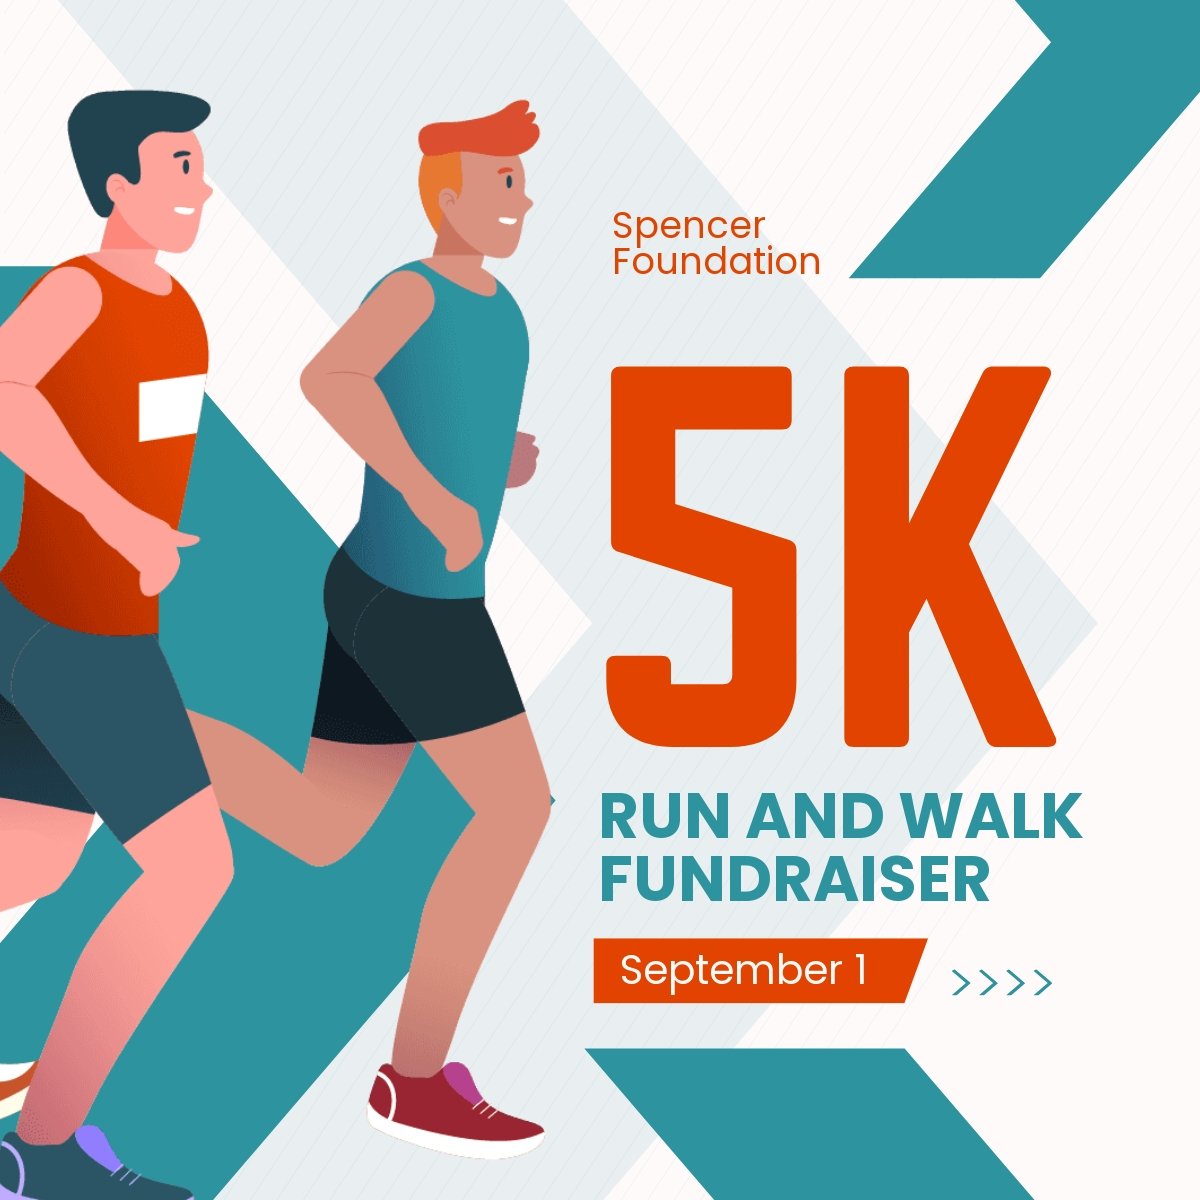 5k Run And Walk Fundraiser Linkedin Post